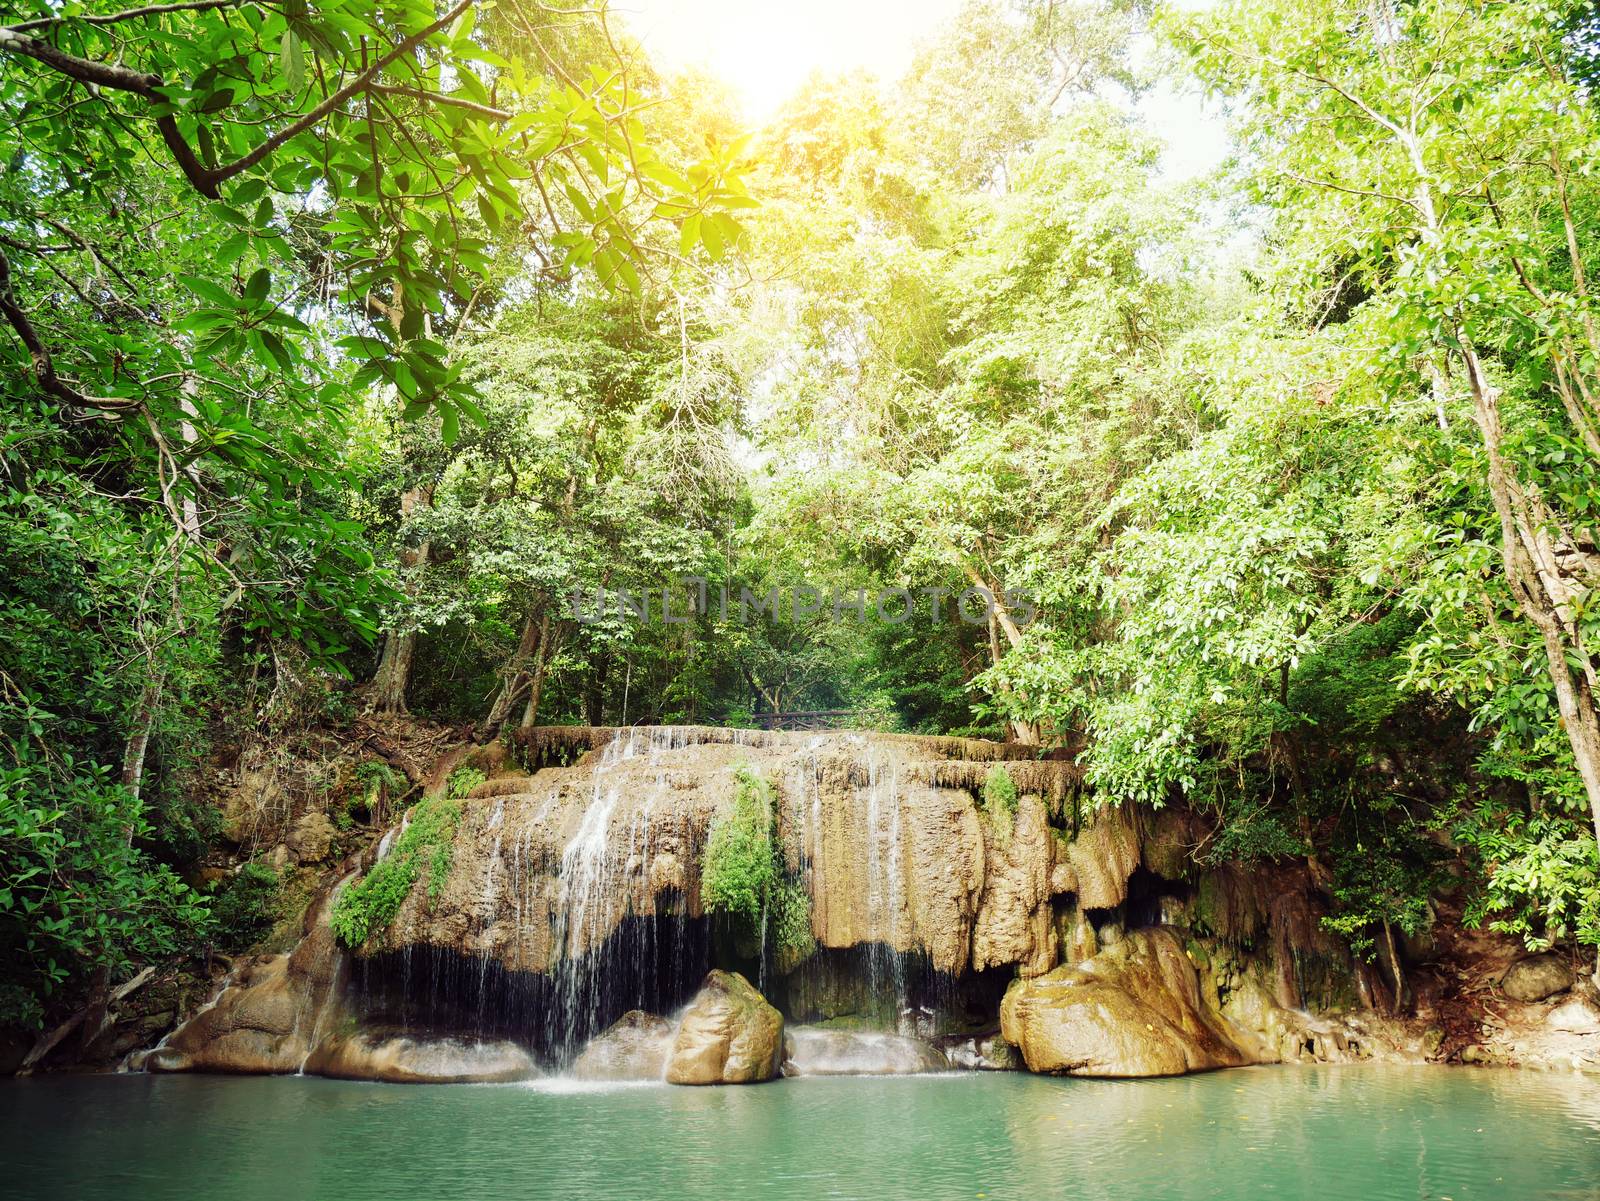 Landscape photo, Erawan Waterfall, beautiful famous waterfall in rain forest at Kanchanaburi province, Thailand by asiandelight